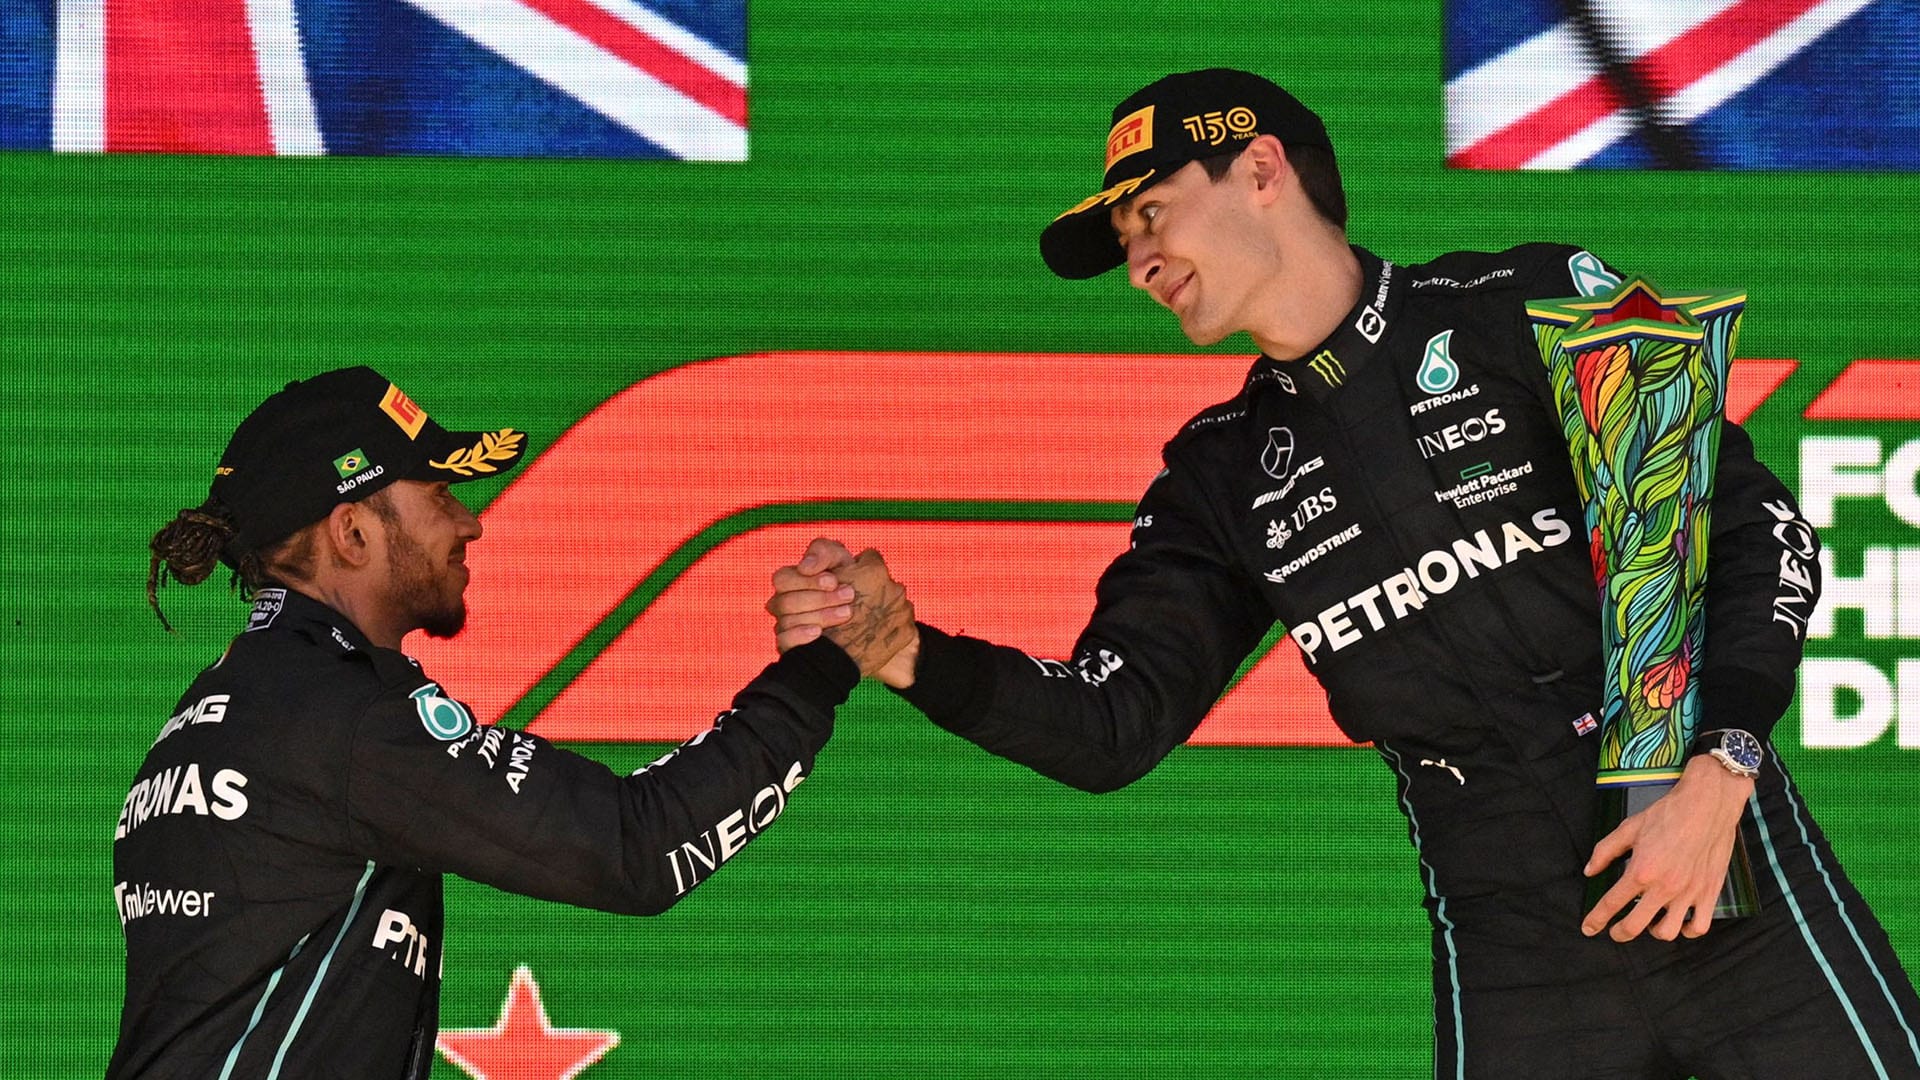 Russell leads home Hamilton for breakthrough Sao Paulo GP win